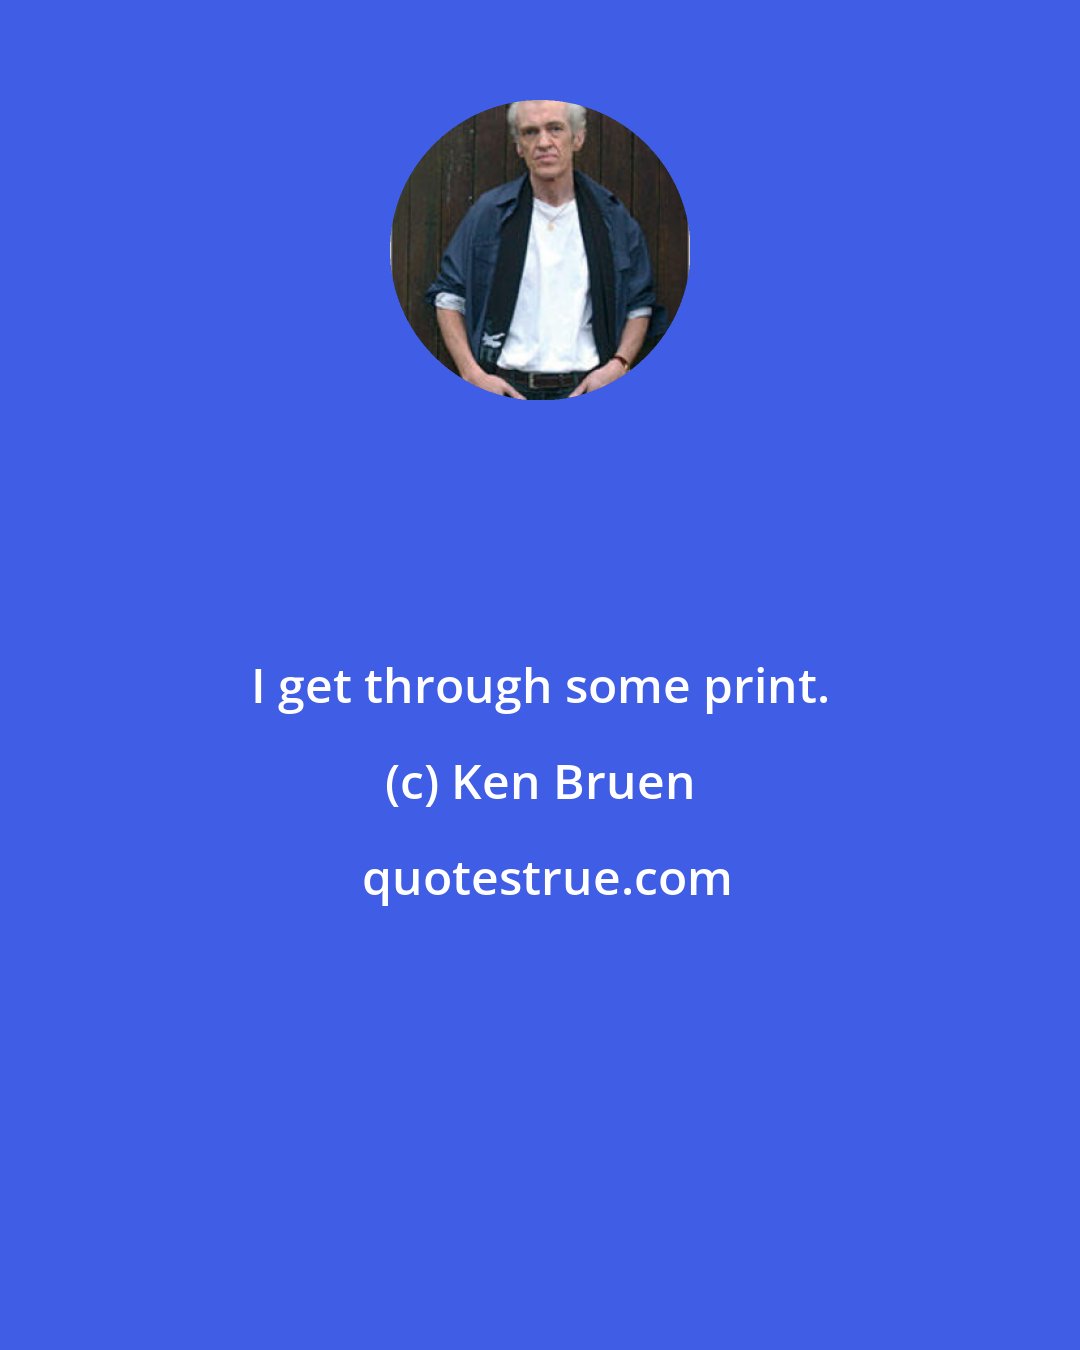 Ken Bruen: I get through some print.